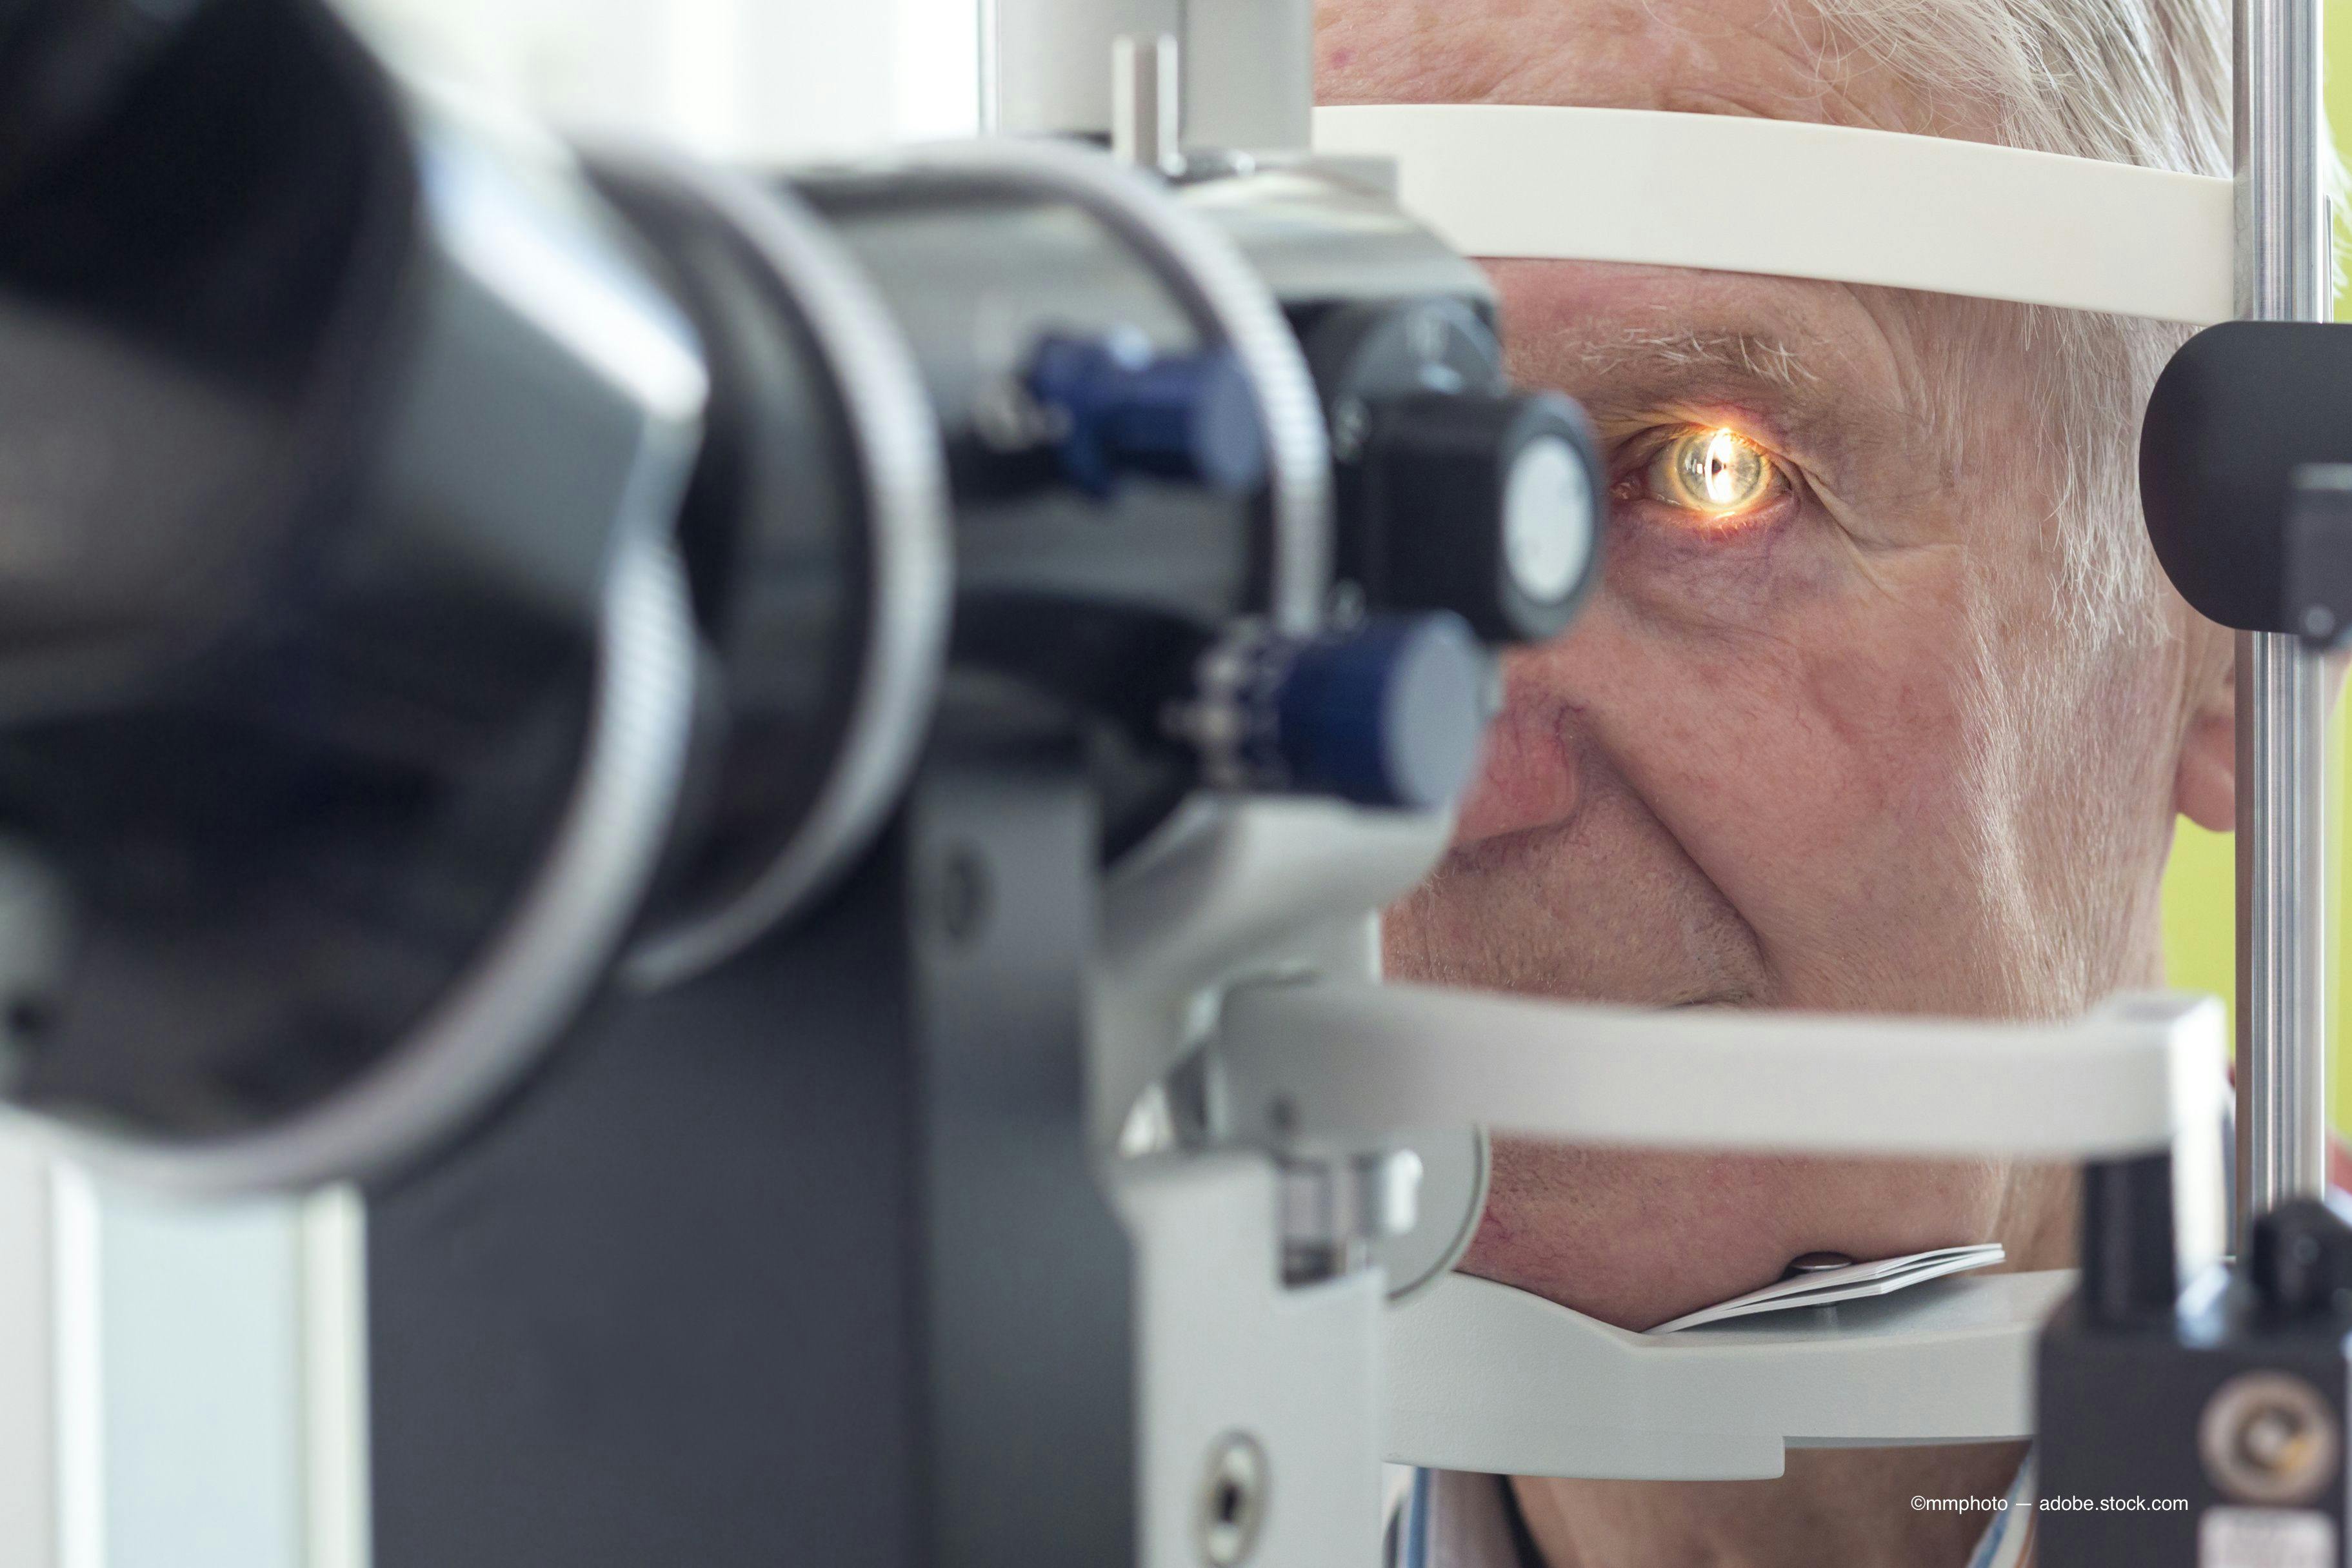 Lensar integrating phacoemulsification technology into adaptive cataract treatment system